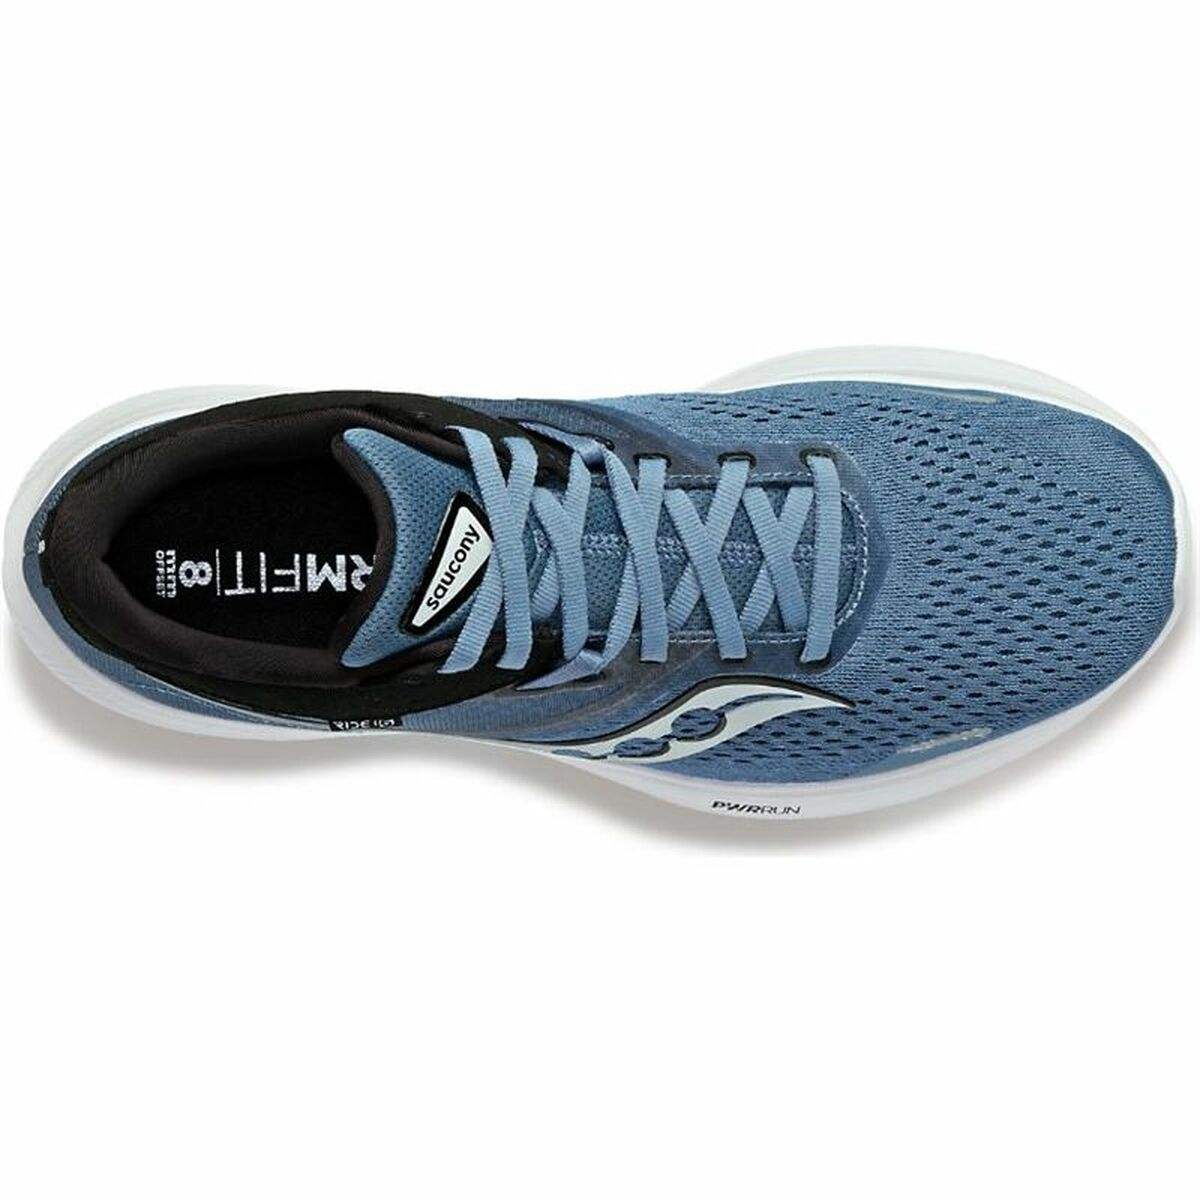 Chaussures de Running pour Adultes Saucony Ride 16 Bleu Homme - Saucony - Jardin D'Eyden - jardindeyden.fr